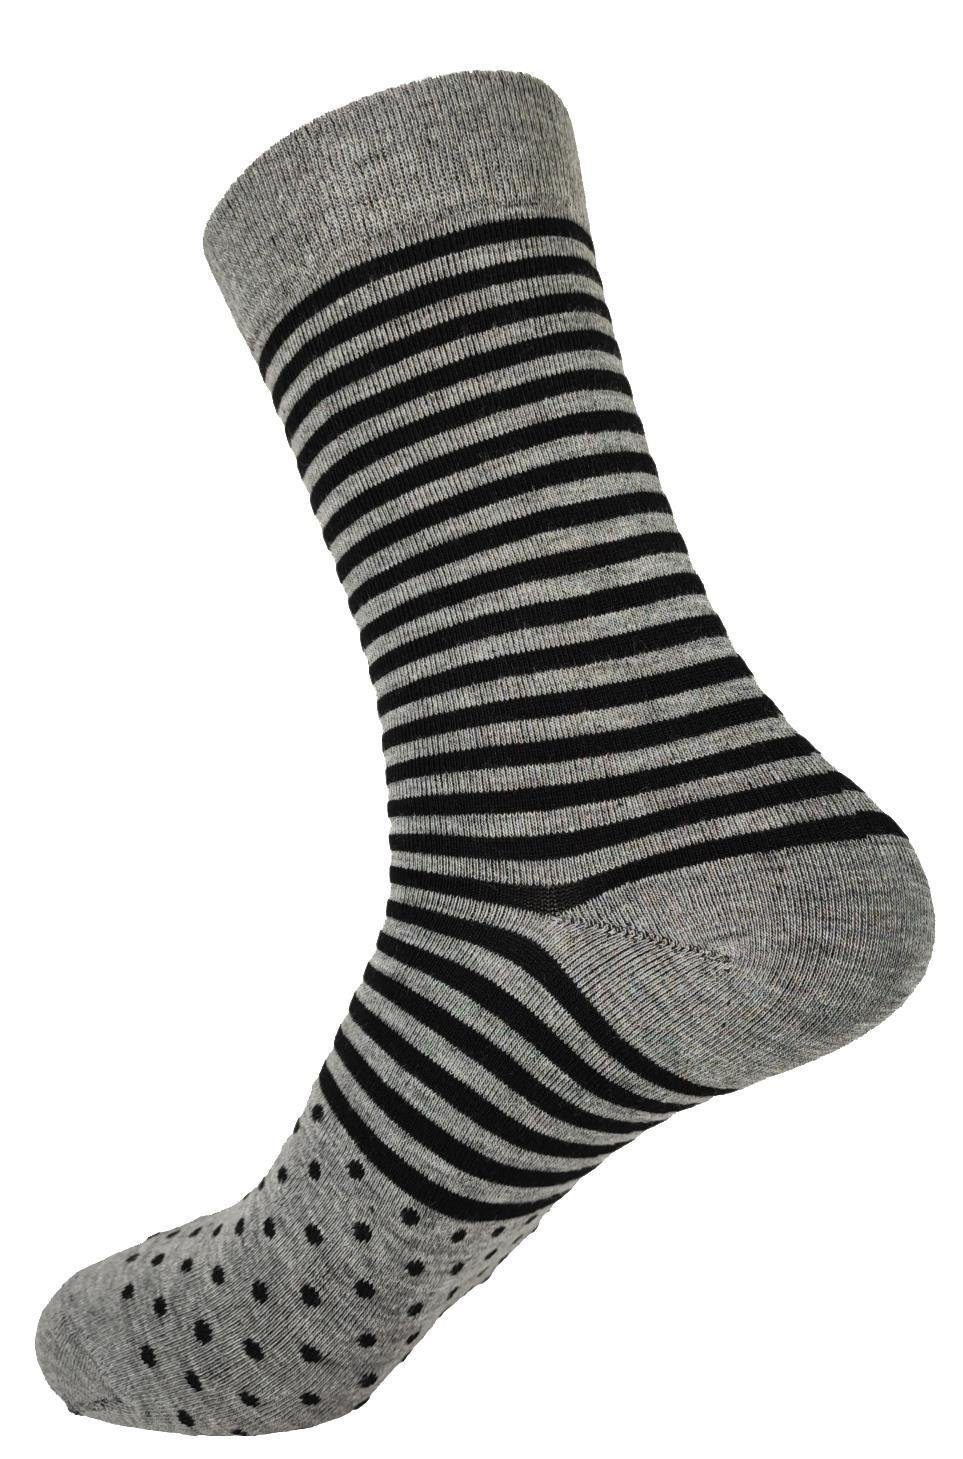 EloModa Freizeitsocken 12 Mix11 Paar, Paar Socken (12-Paar) Muster 35-38 12 39-42 Baumwolle; Damen mit